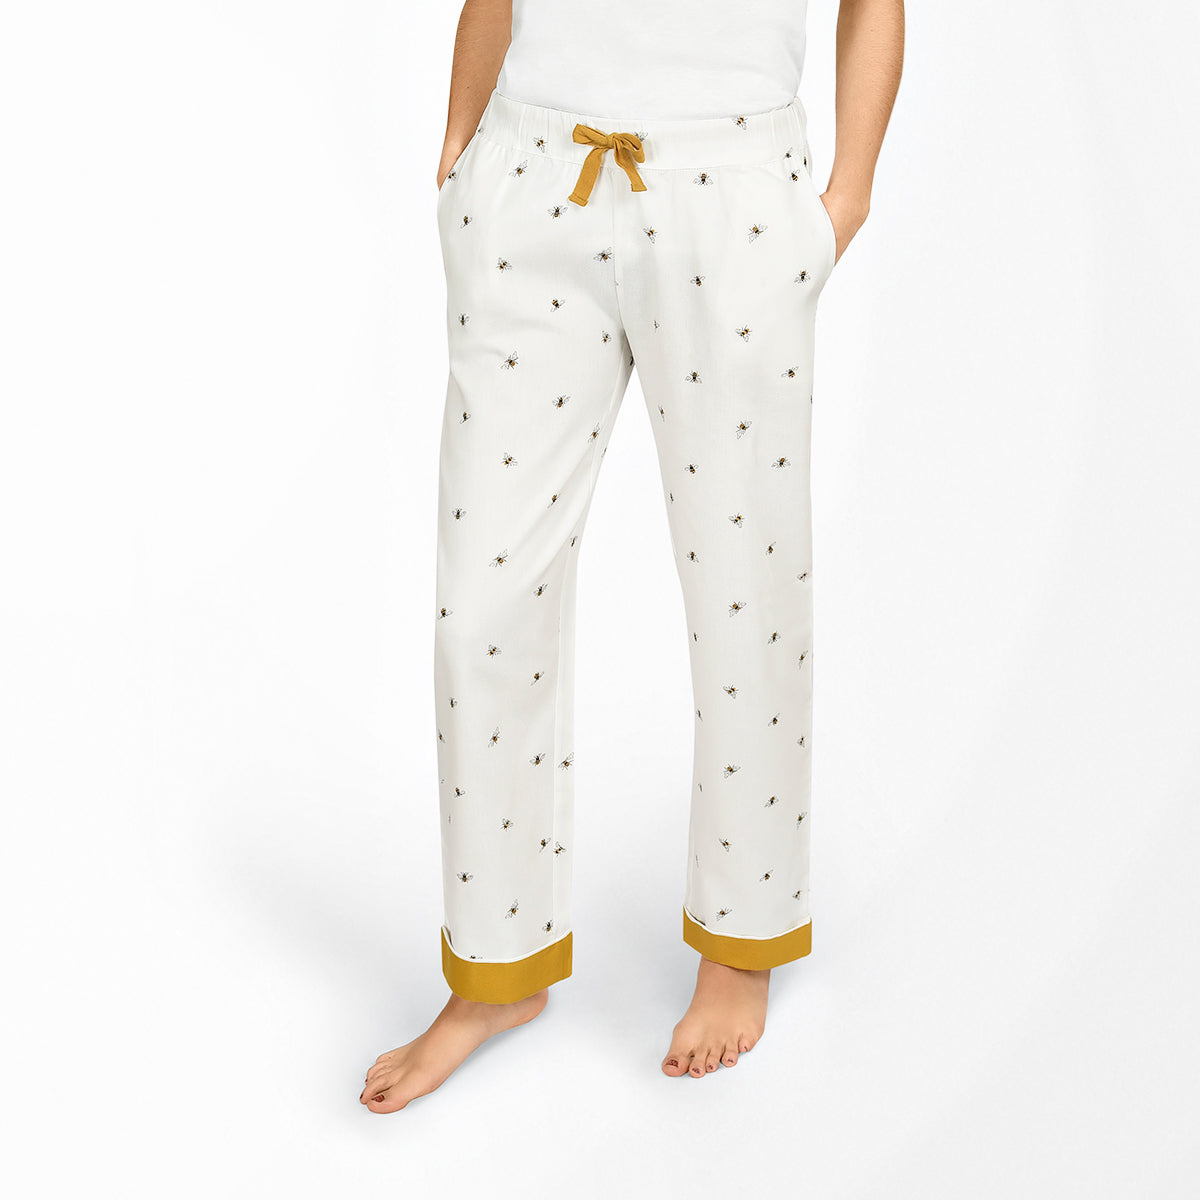 Fdfklak New Plaid Cotton Ladies Pajama Pants Pyjama Trousers Women Sleep  Bottoms Lounge Wear Sleep Pants Spring Summer Q1311  Sleep Bottoms   AliExpress